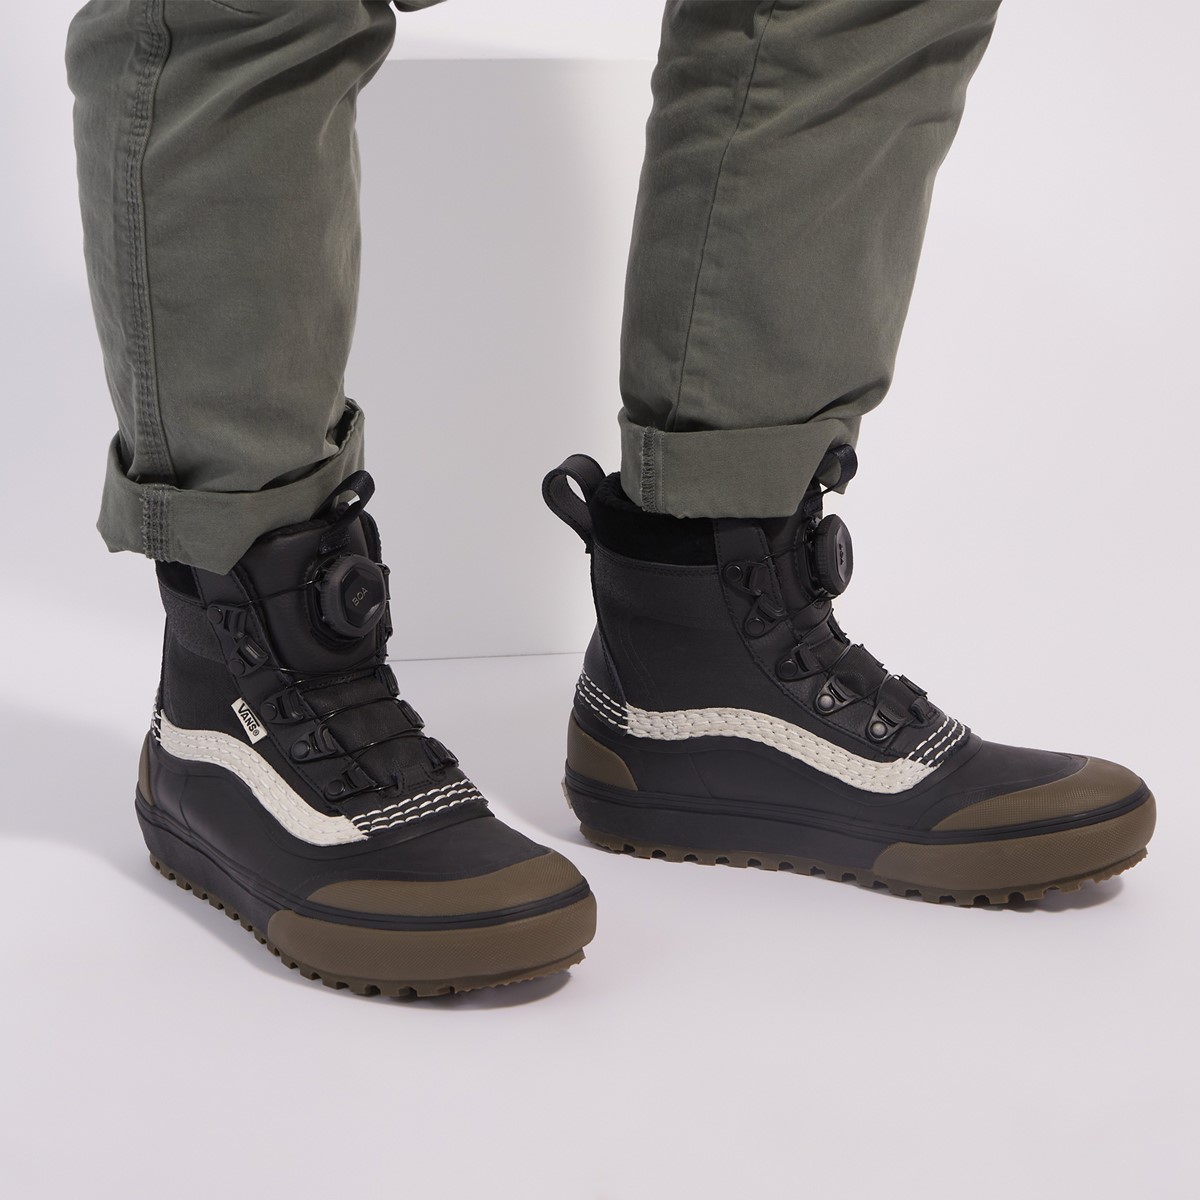 Men's Standard Mid Boa MTE Winter Boots in Black/Brown/White Little Burgundy